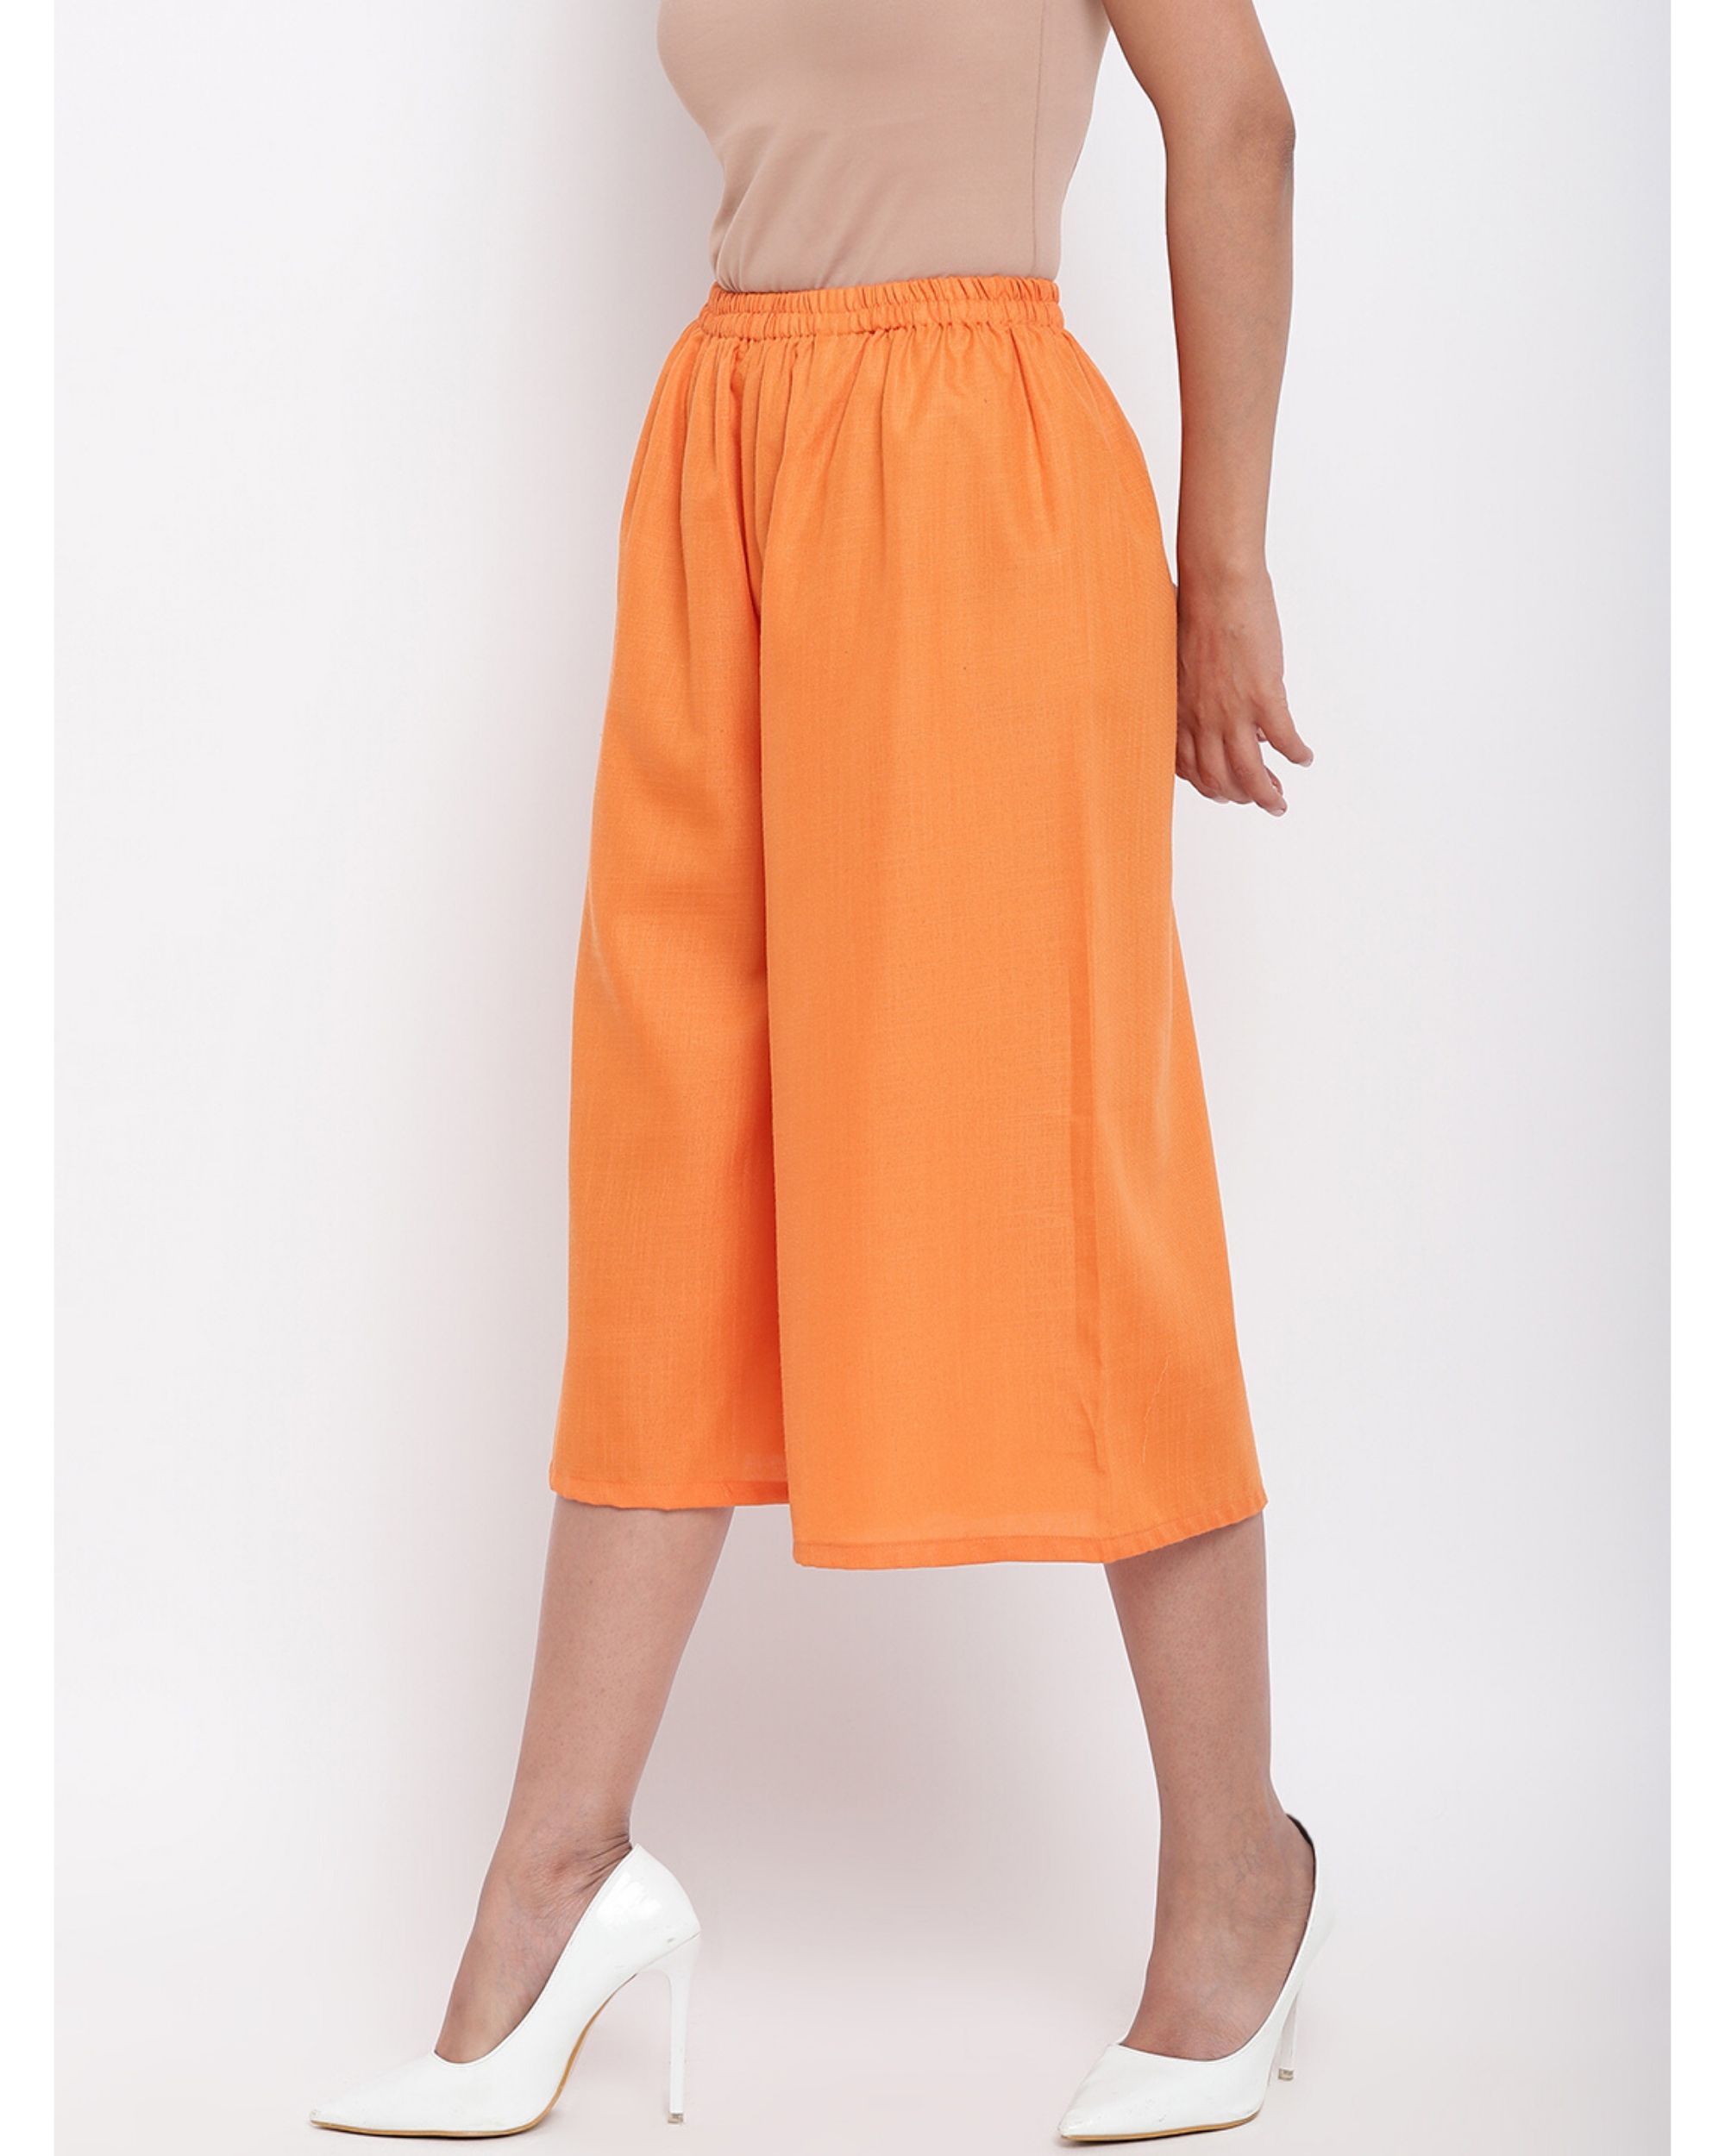 Orange cotton linen short palazzo by trueBrowns | The Secret Label